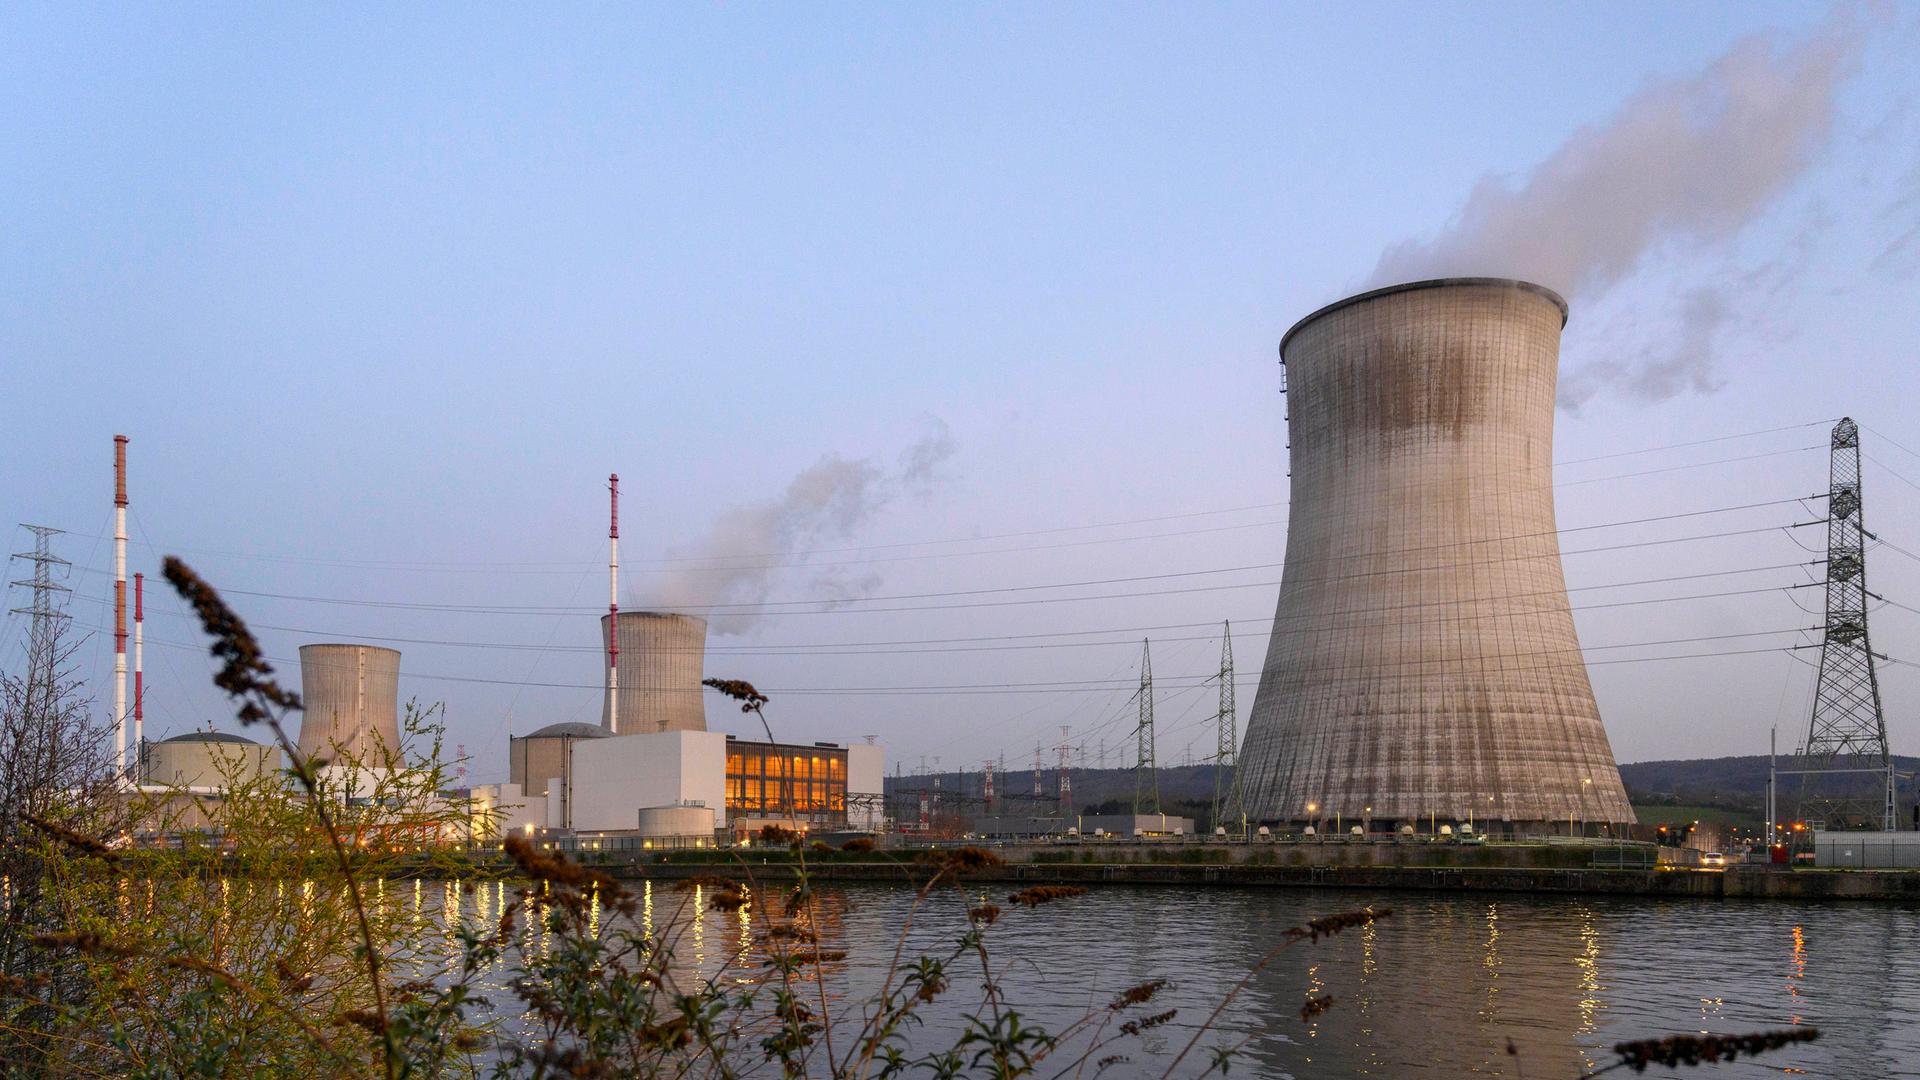 Blick auf die drei Reaktorblöcke des Kernkraftwerks Tihange in Belgien